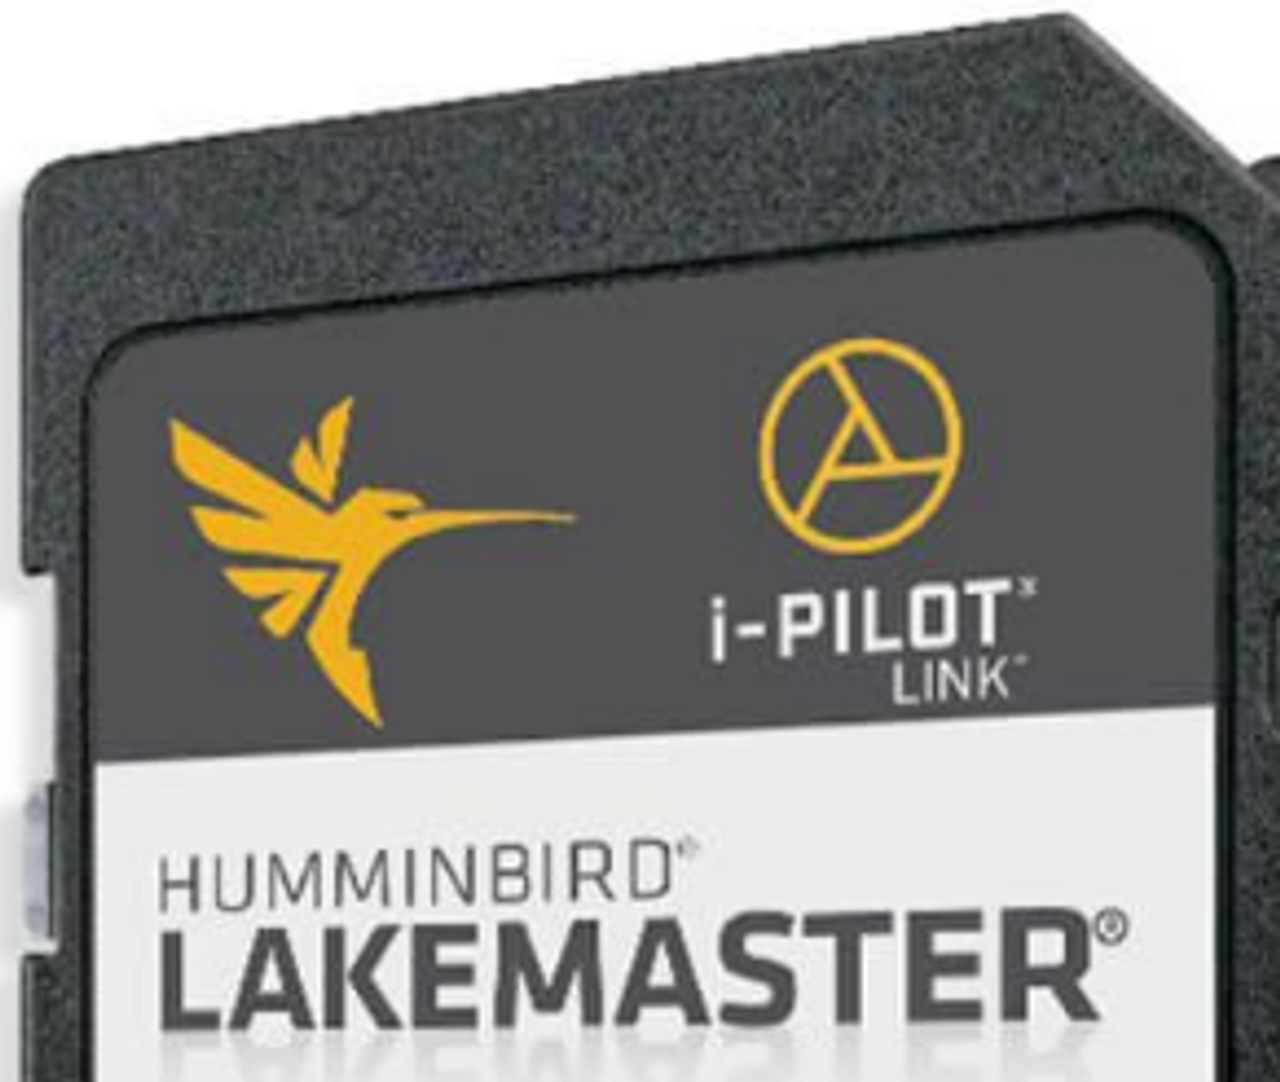 New Humminbird Lakemaster Chip - Classified Ads - Classified Ads